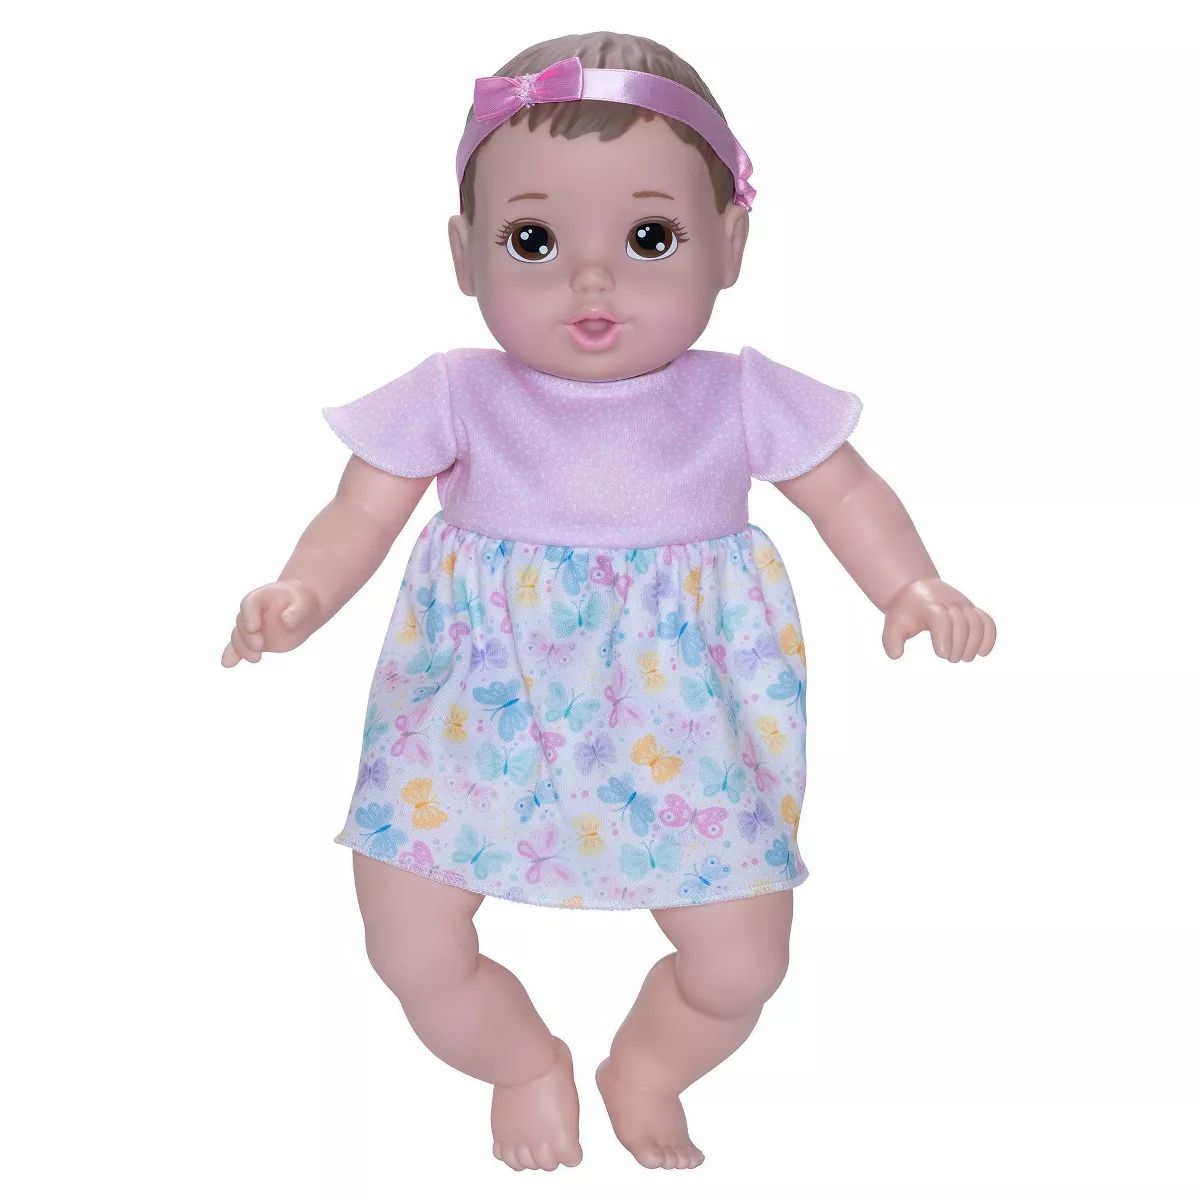 Perfectly Cute Basic 14" Girl Baby Doll - Light Brown Hair, Brown Eyes | Target